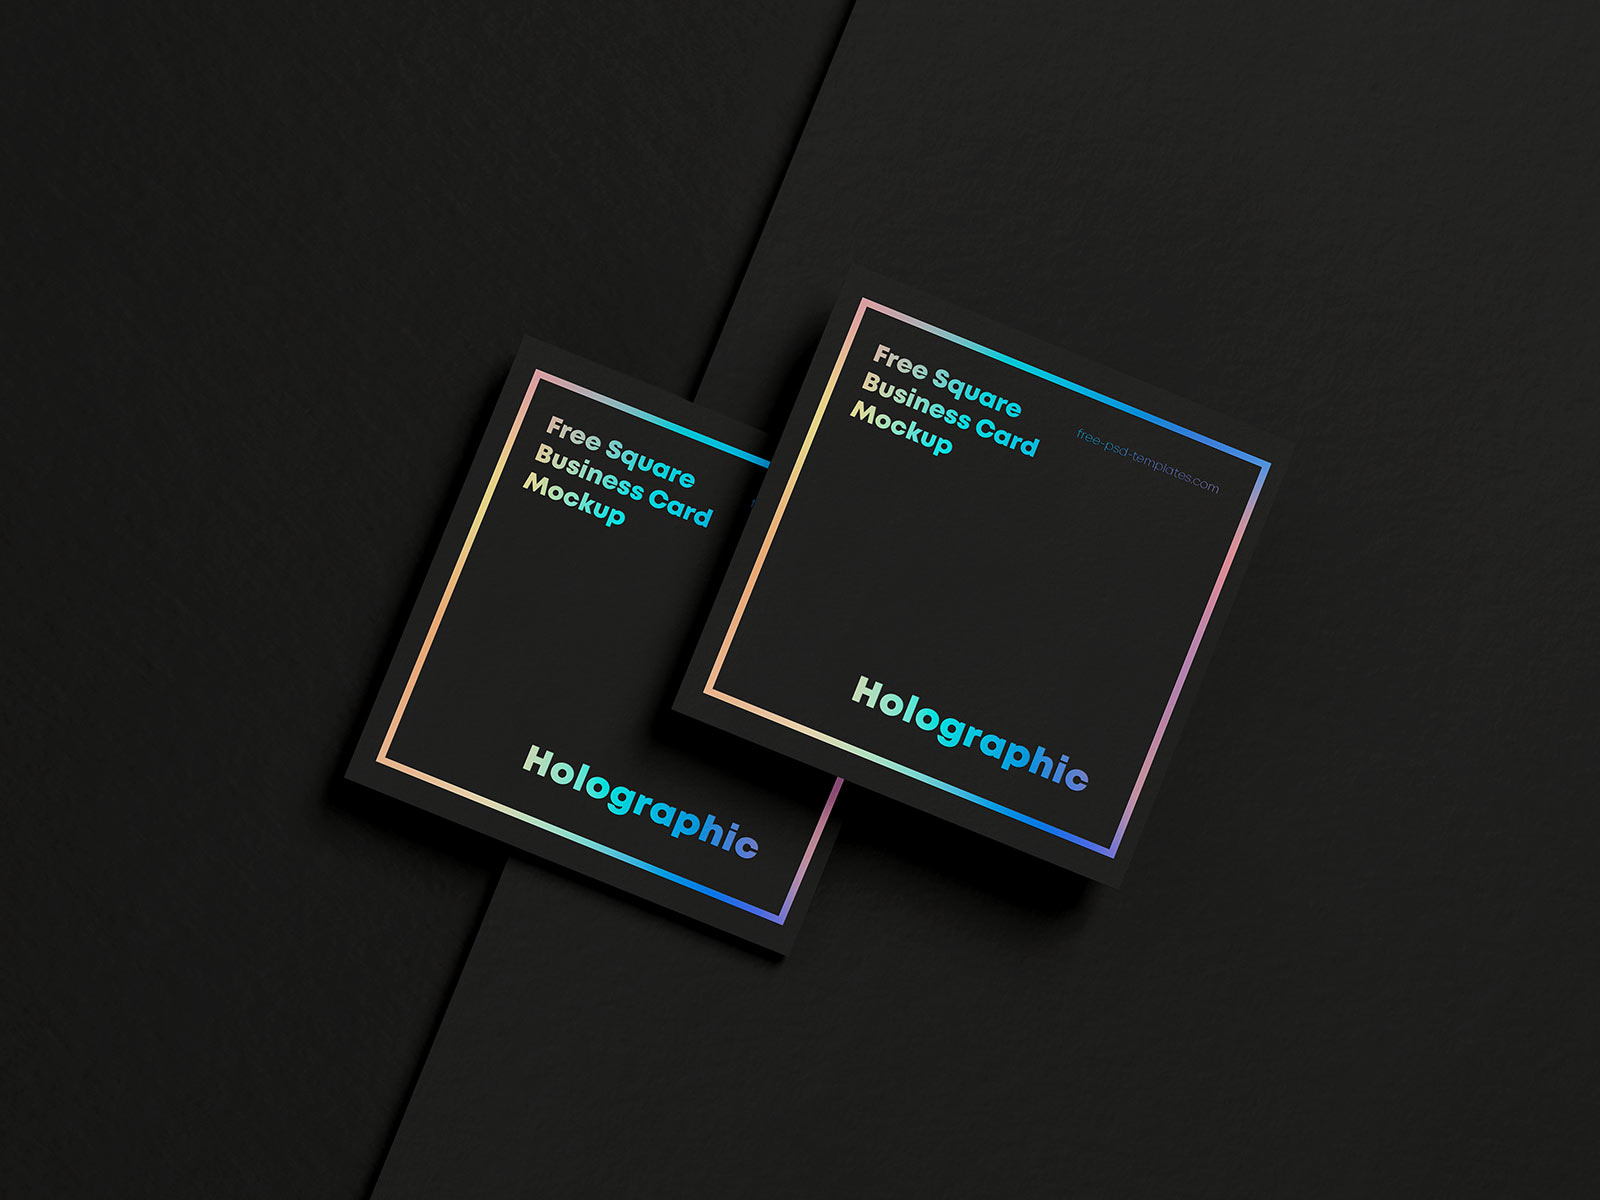 Free Square Black Business Card Mockup PSD Set